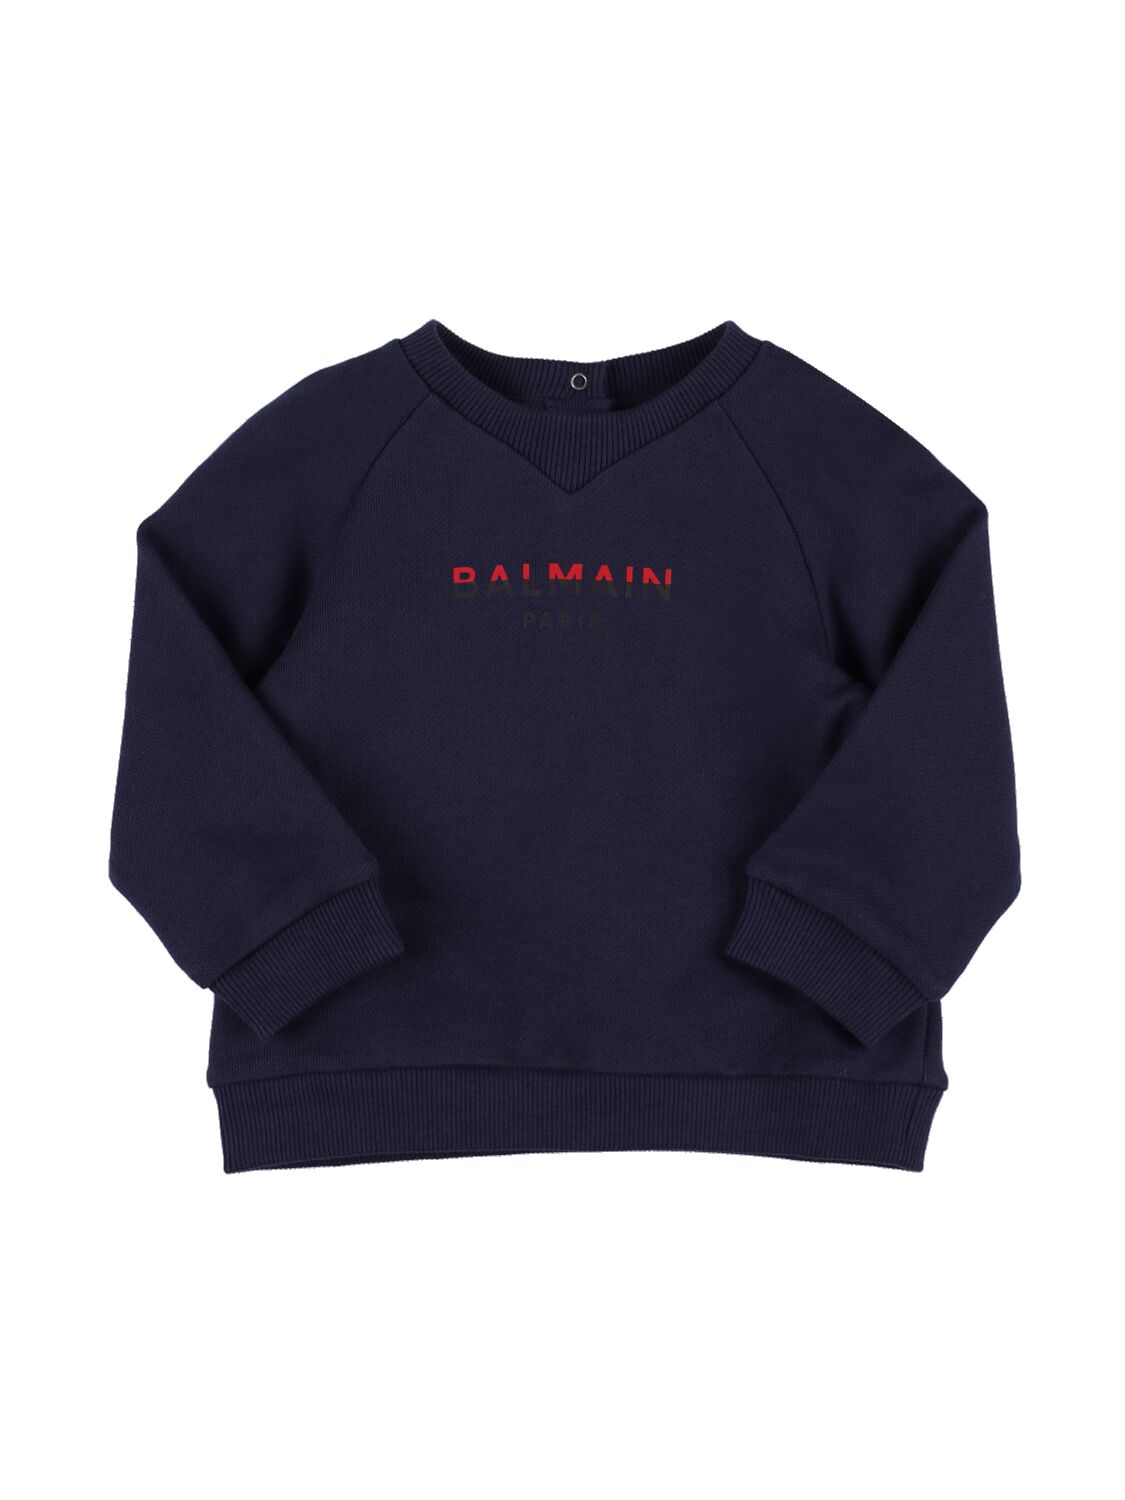 Balmain Babies' Organic Cotton Sweatshirt In Dark Blue